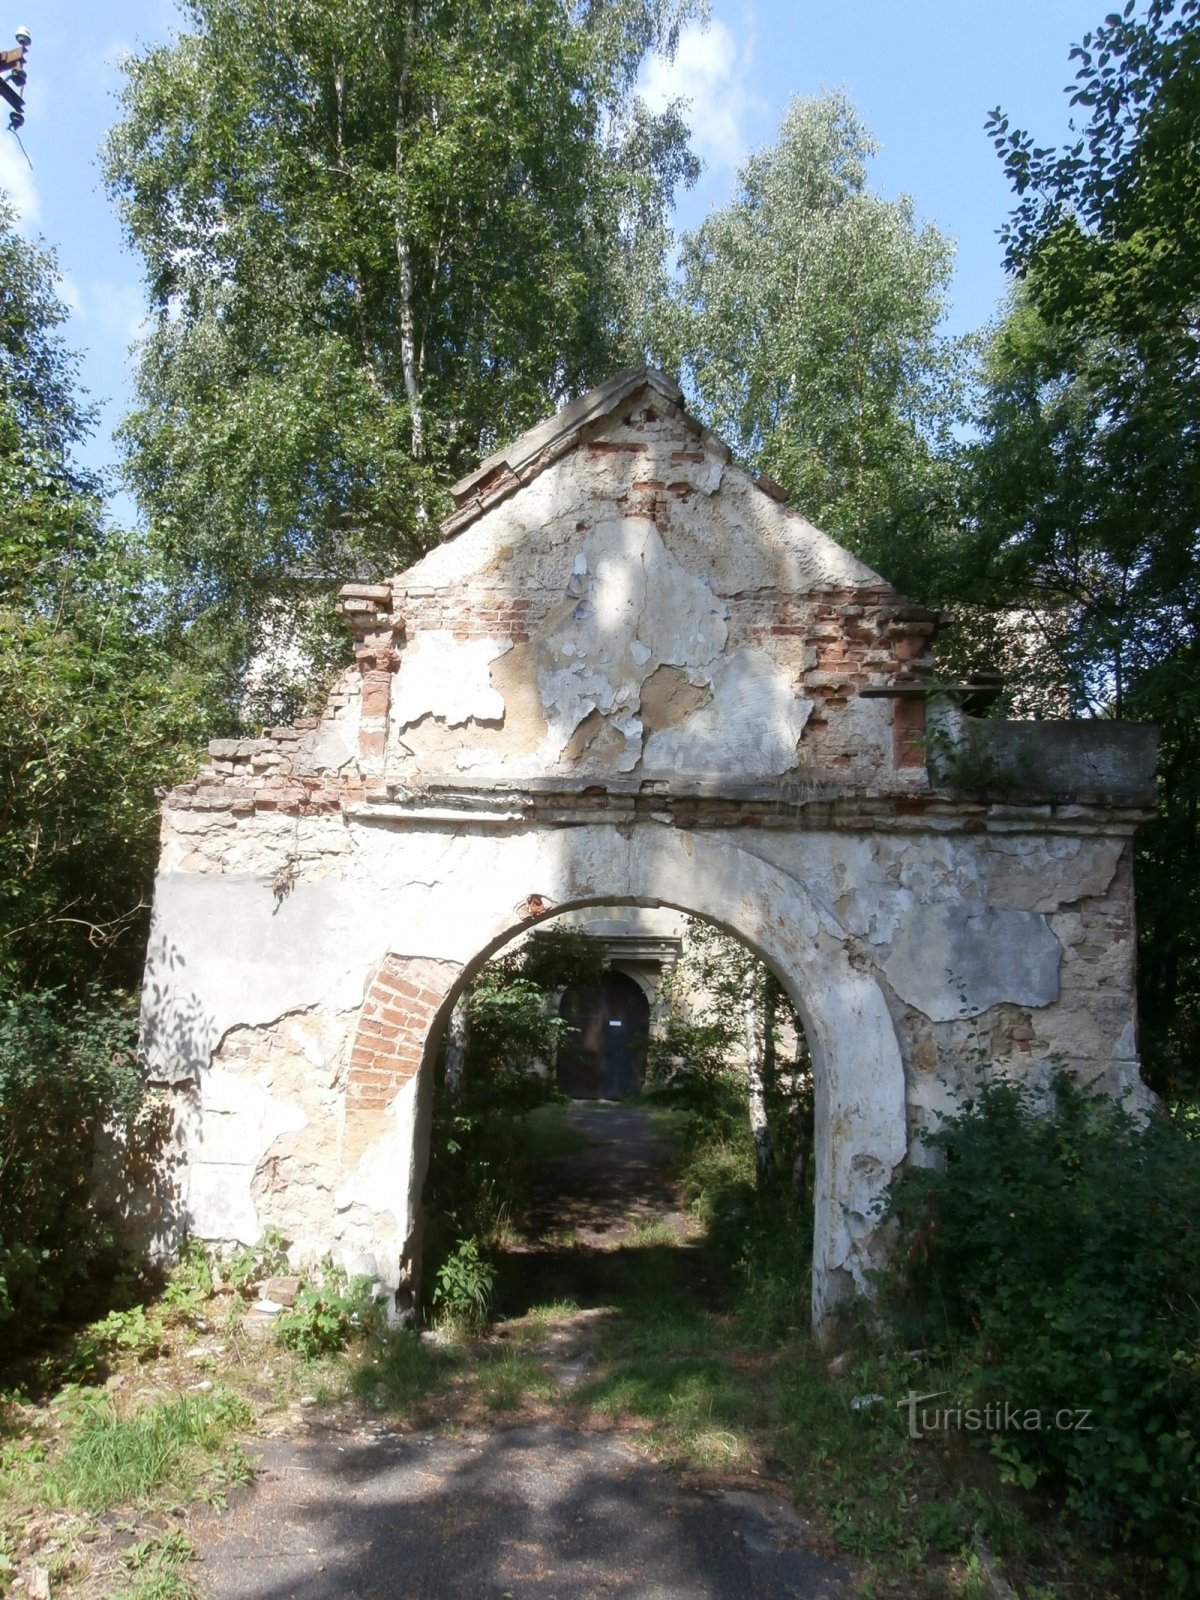 La porte de la forteresse de Kuřívody